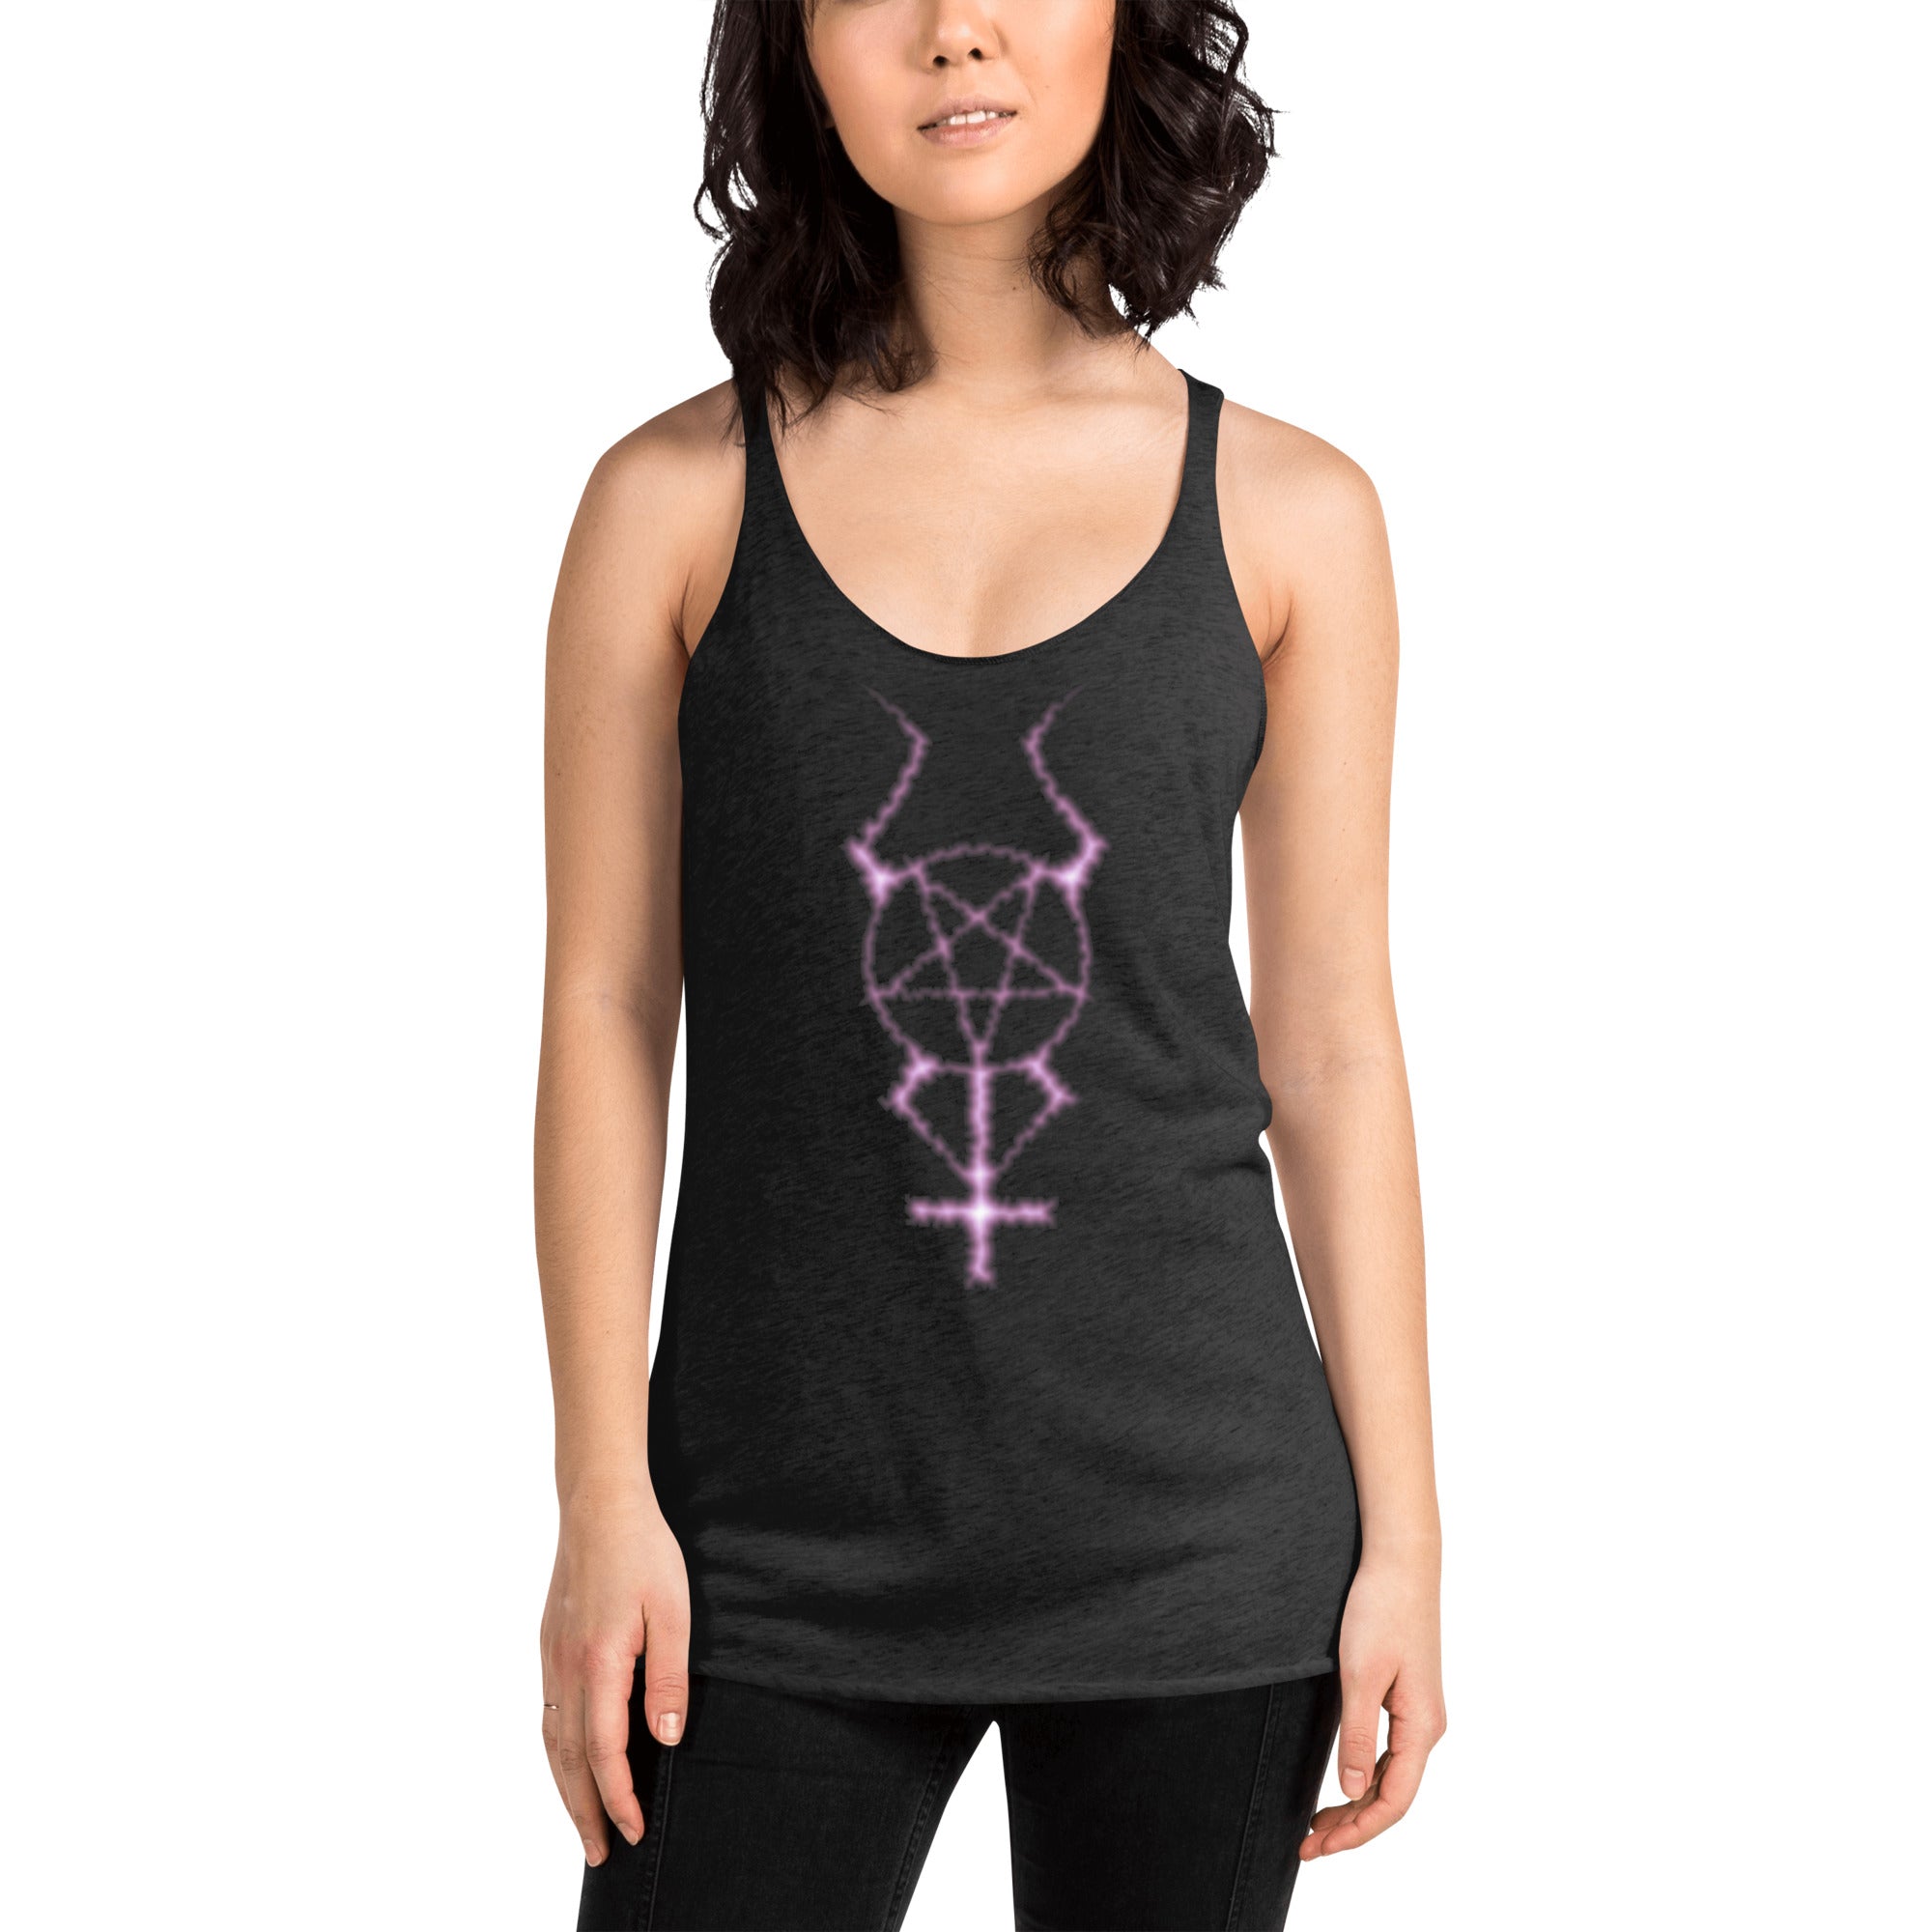 Dark Forces Horned Pentacross Pentagram Cross Women's Racerback Tank Top Shirt - Edge of Life Designs